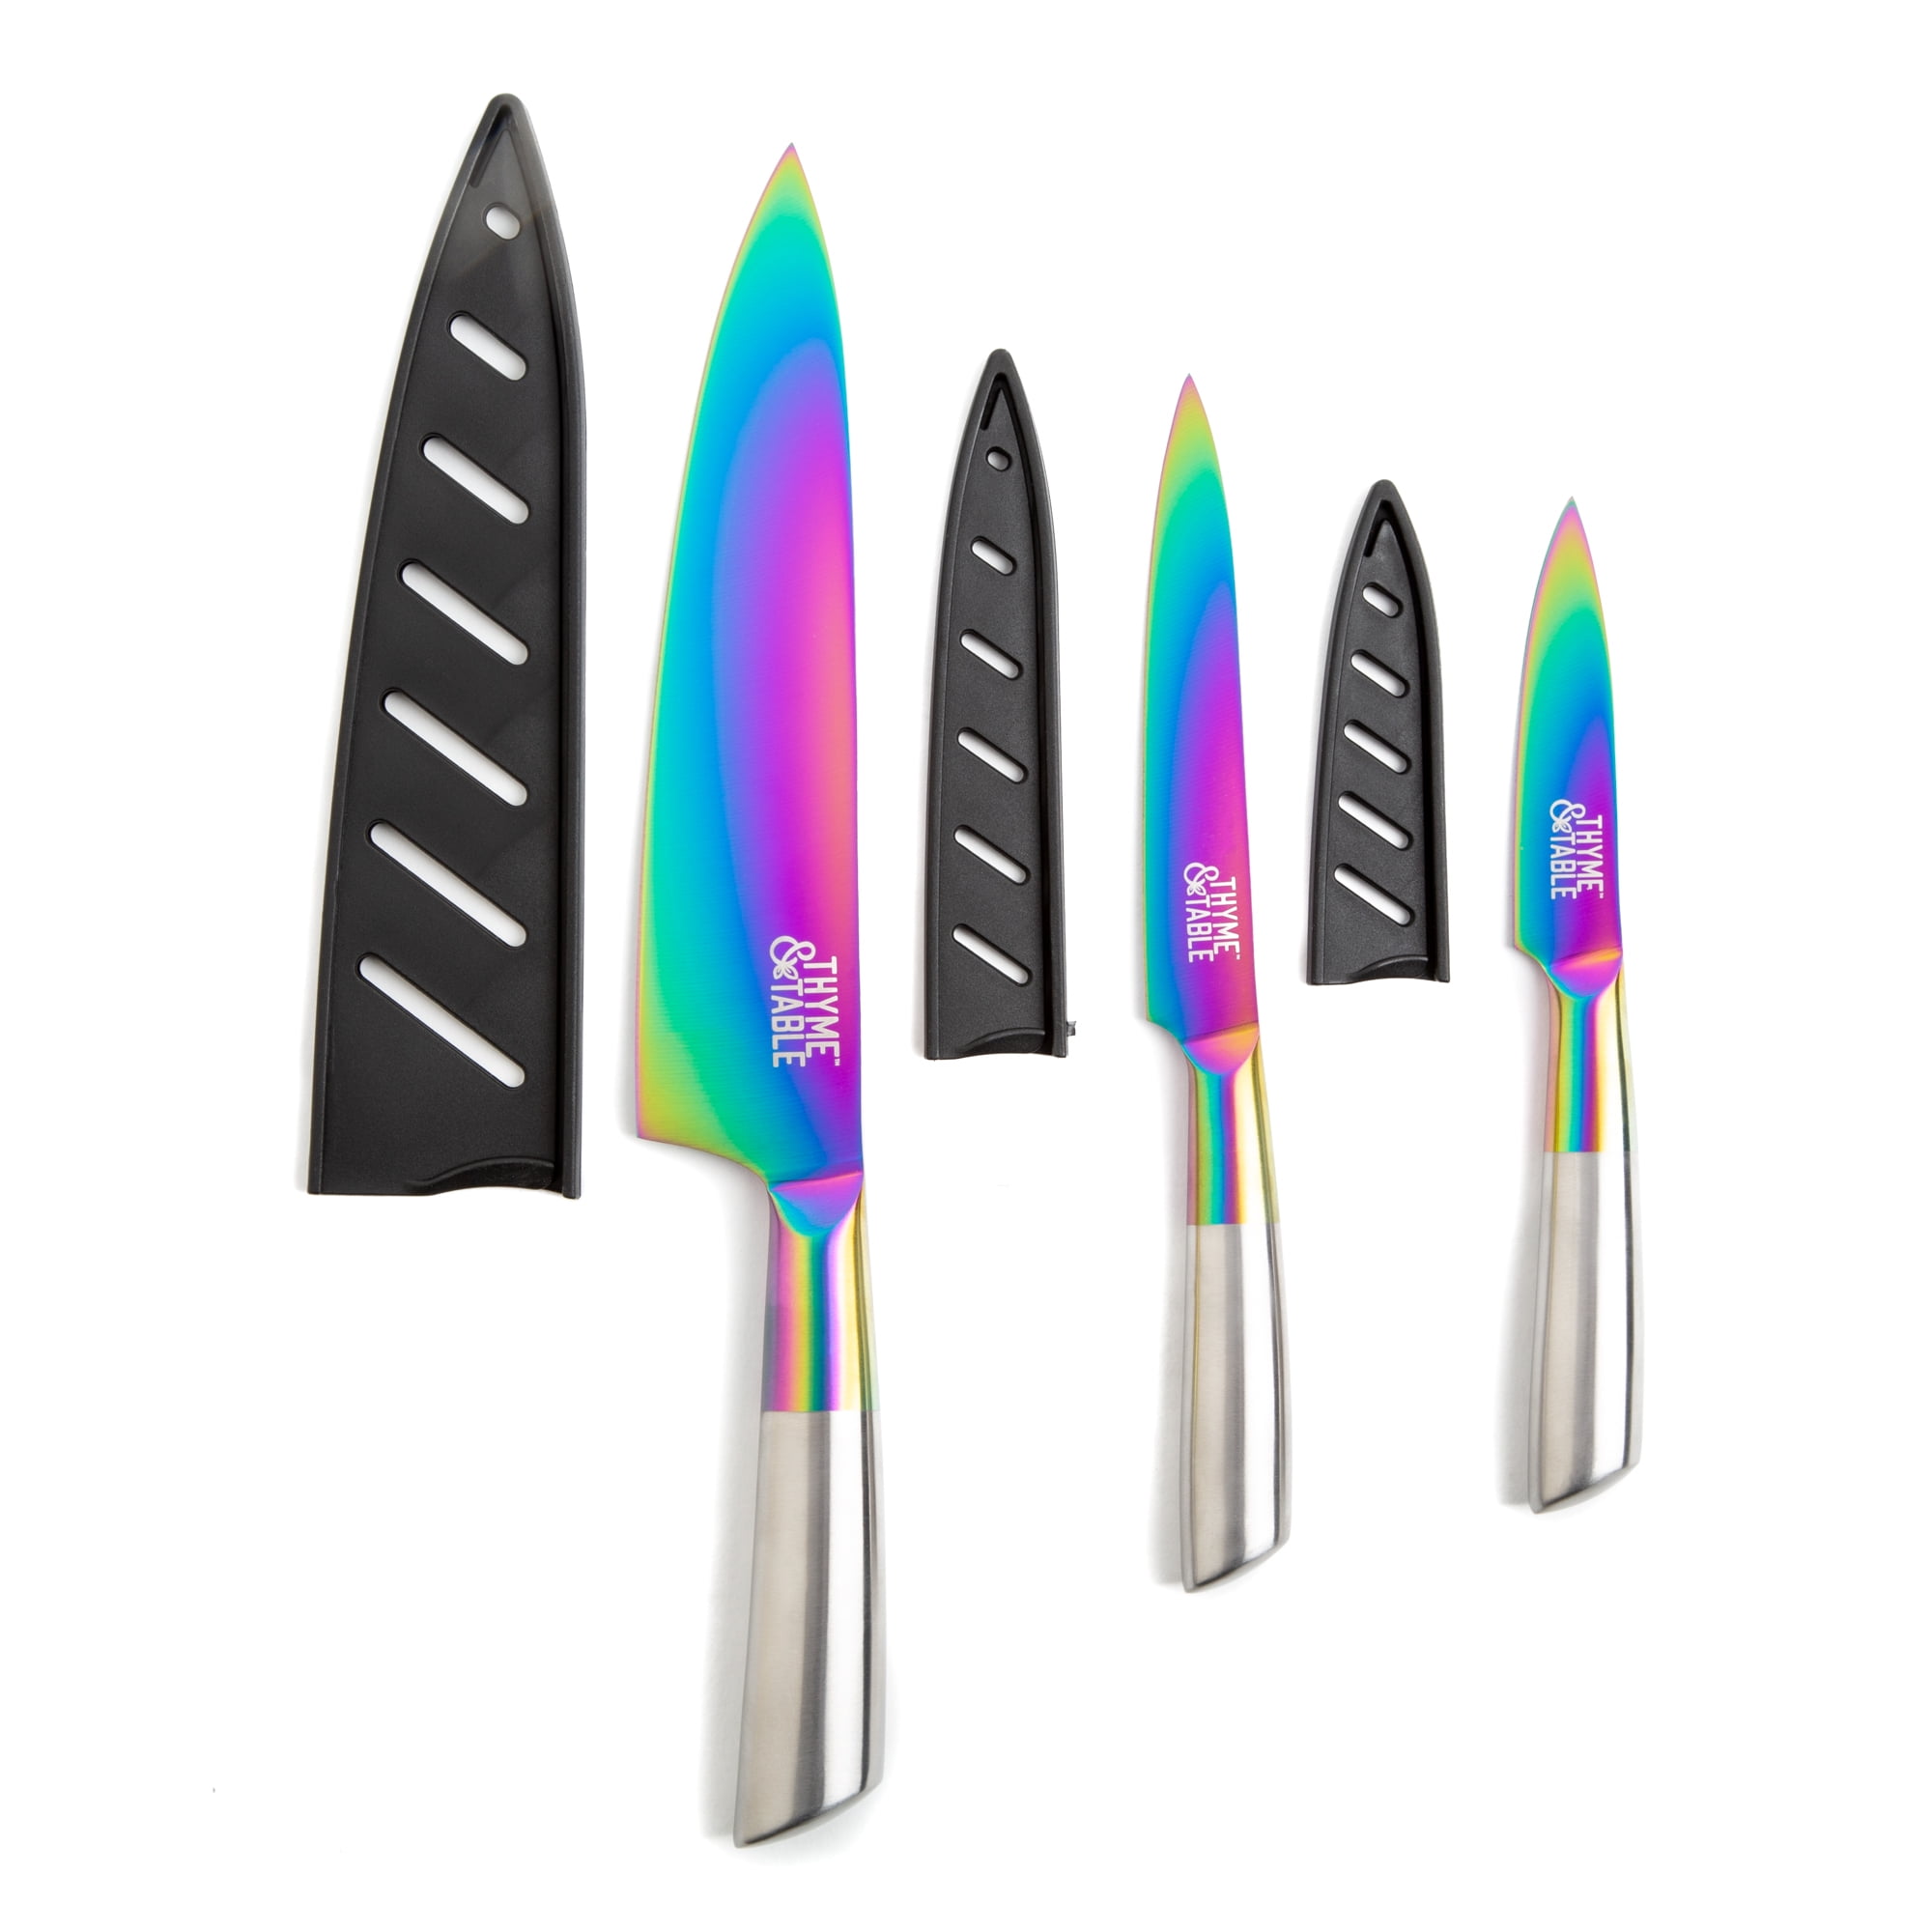 Farberware 11-piece Rainbow Iridescent Blades with Teal Handles and Sheath Titanium  Cutlery Set - Walmart.com